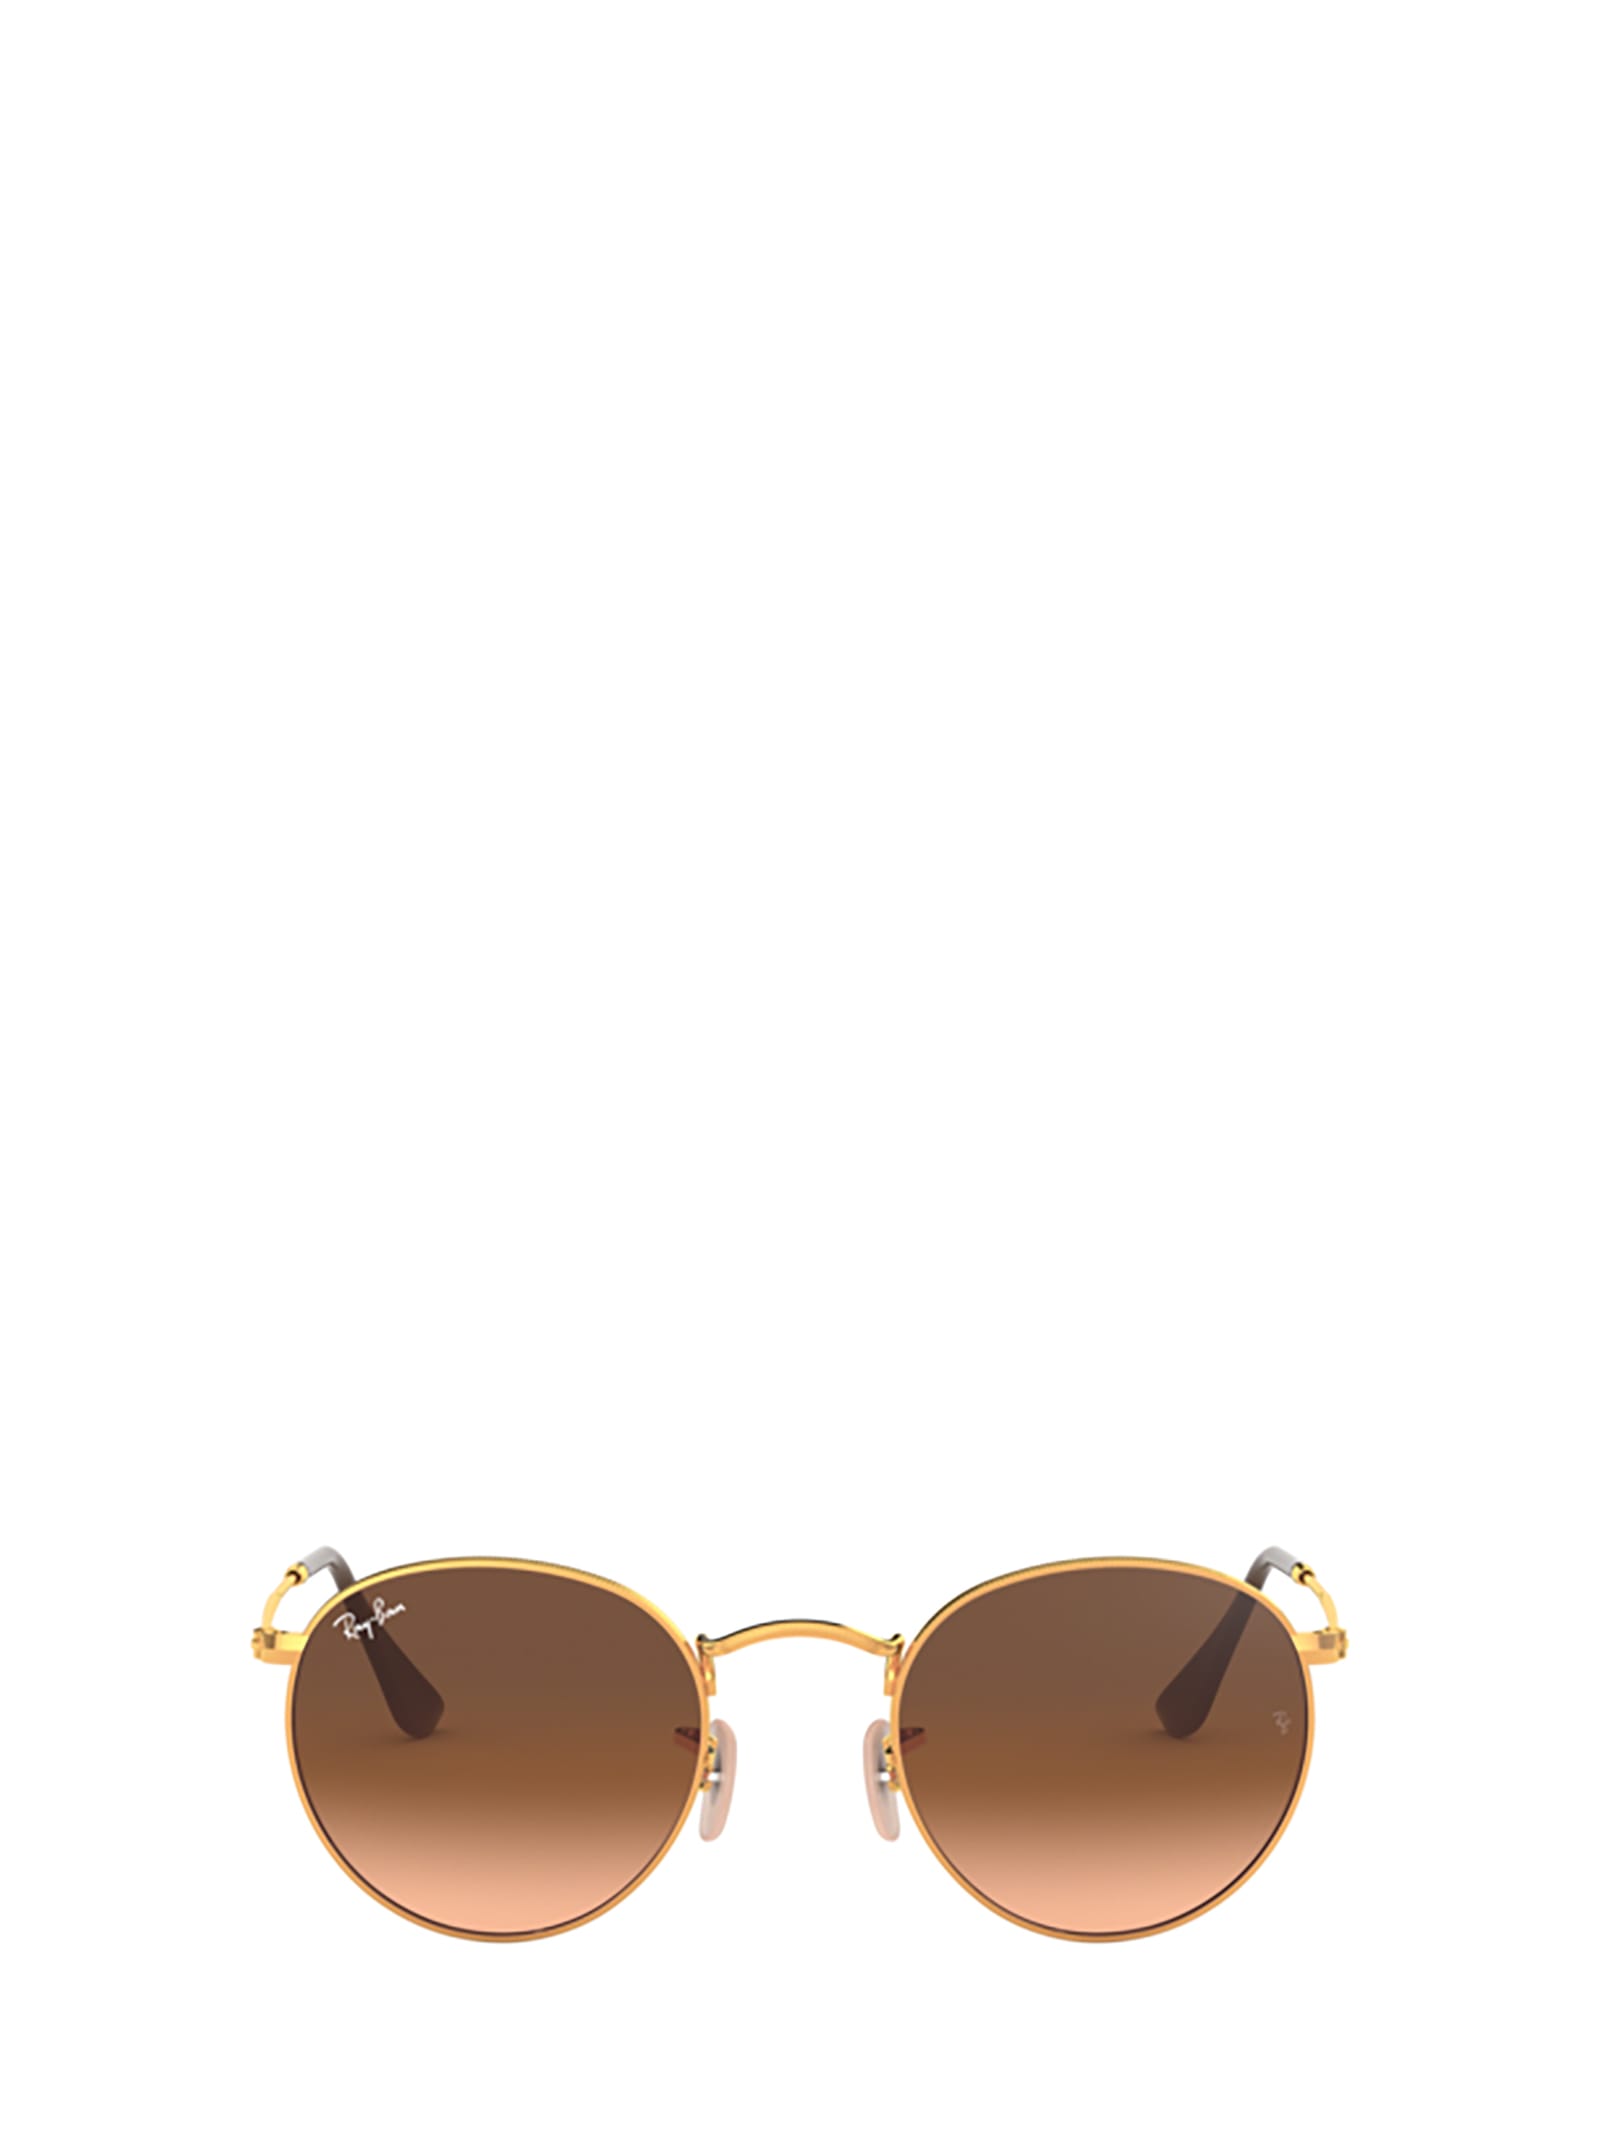 Ray Ban Rb3447 Light Bronze Sunglasses